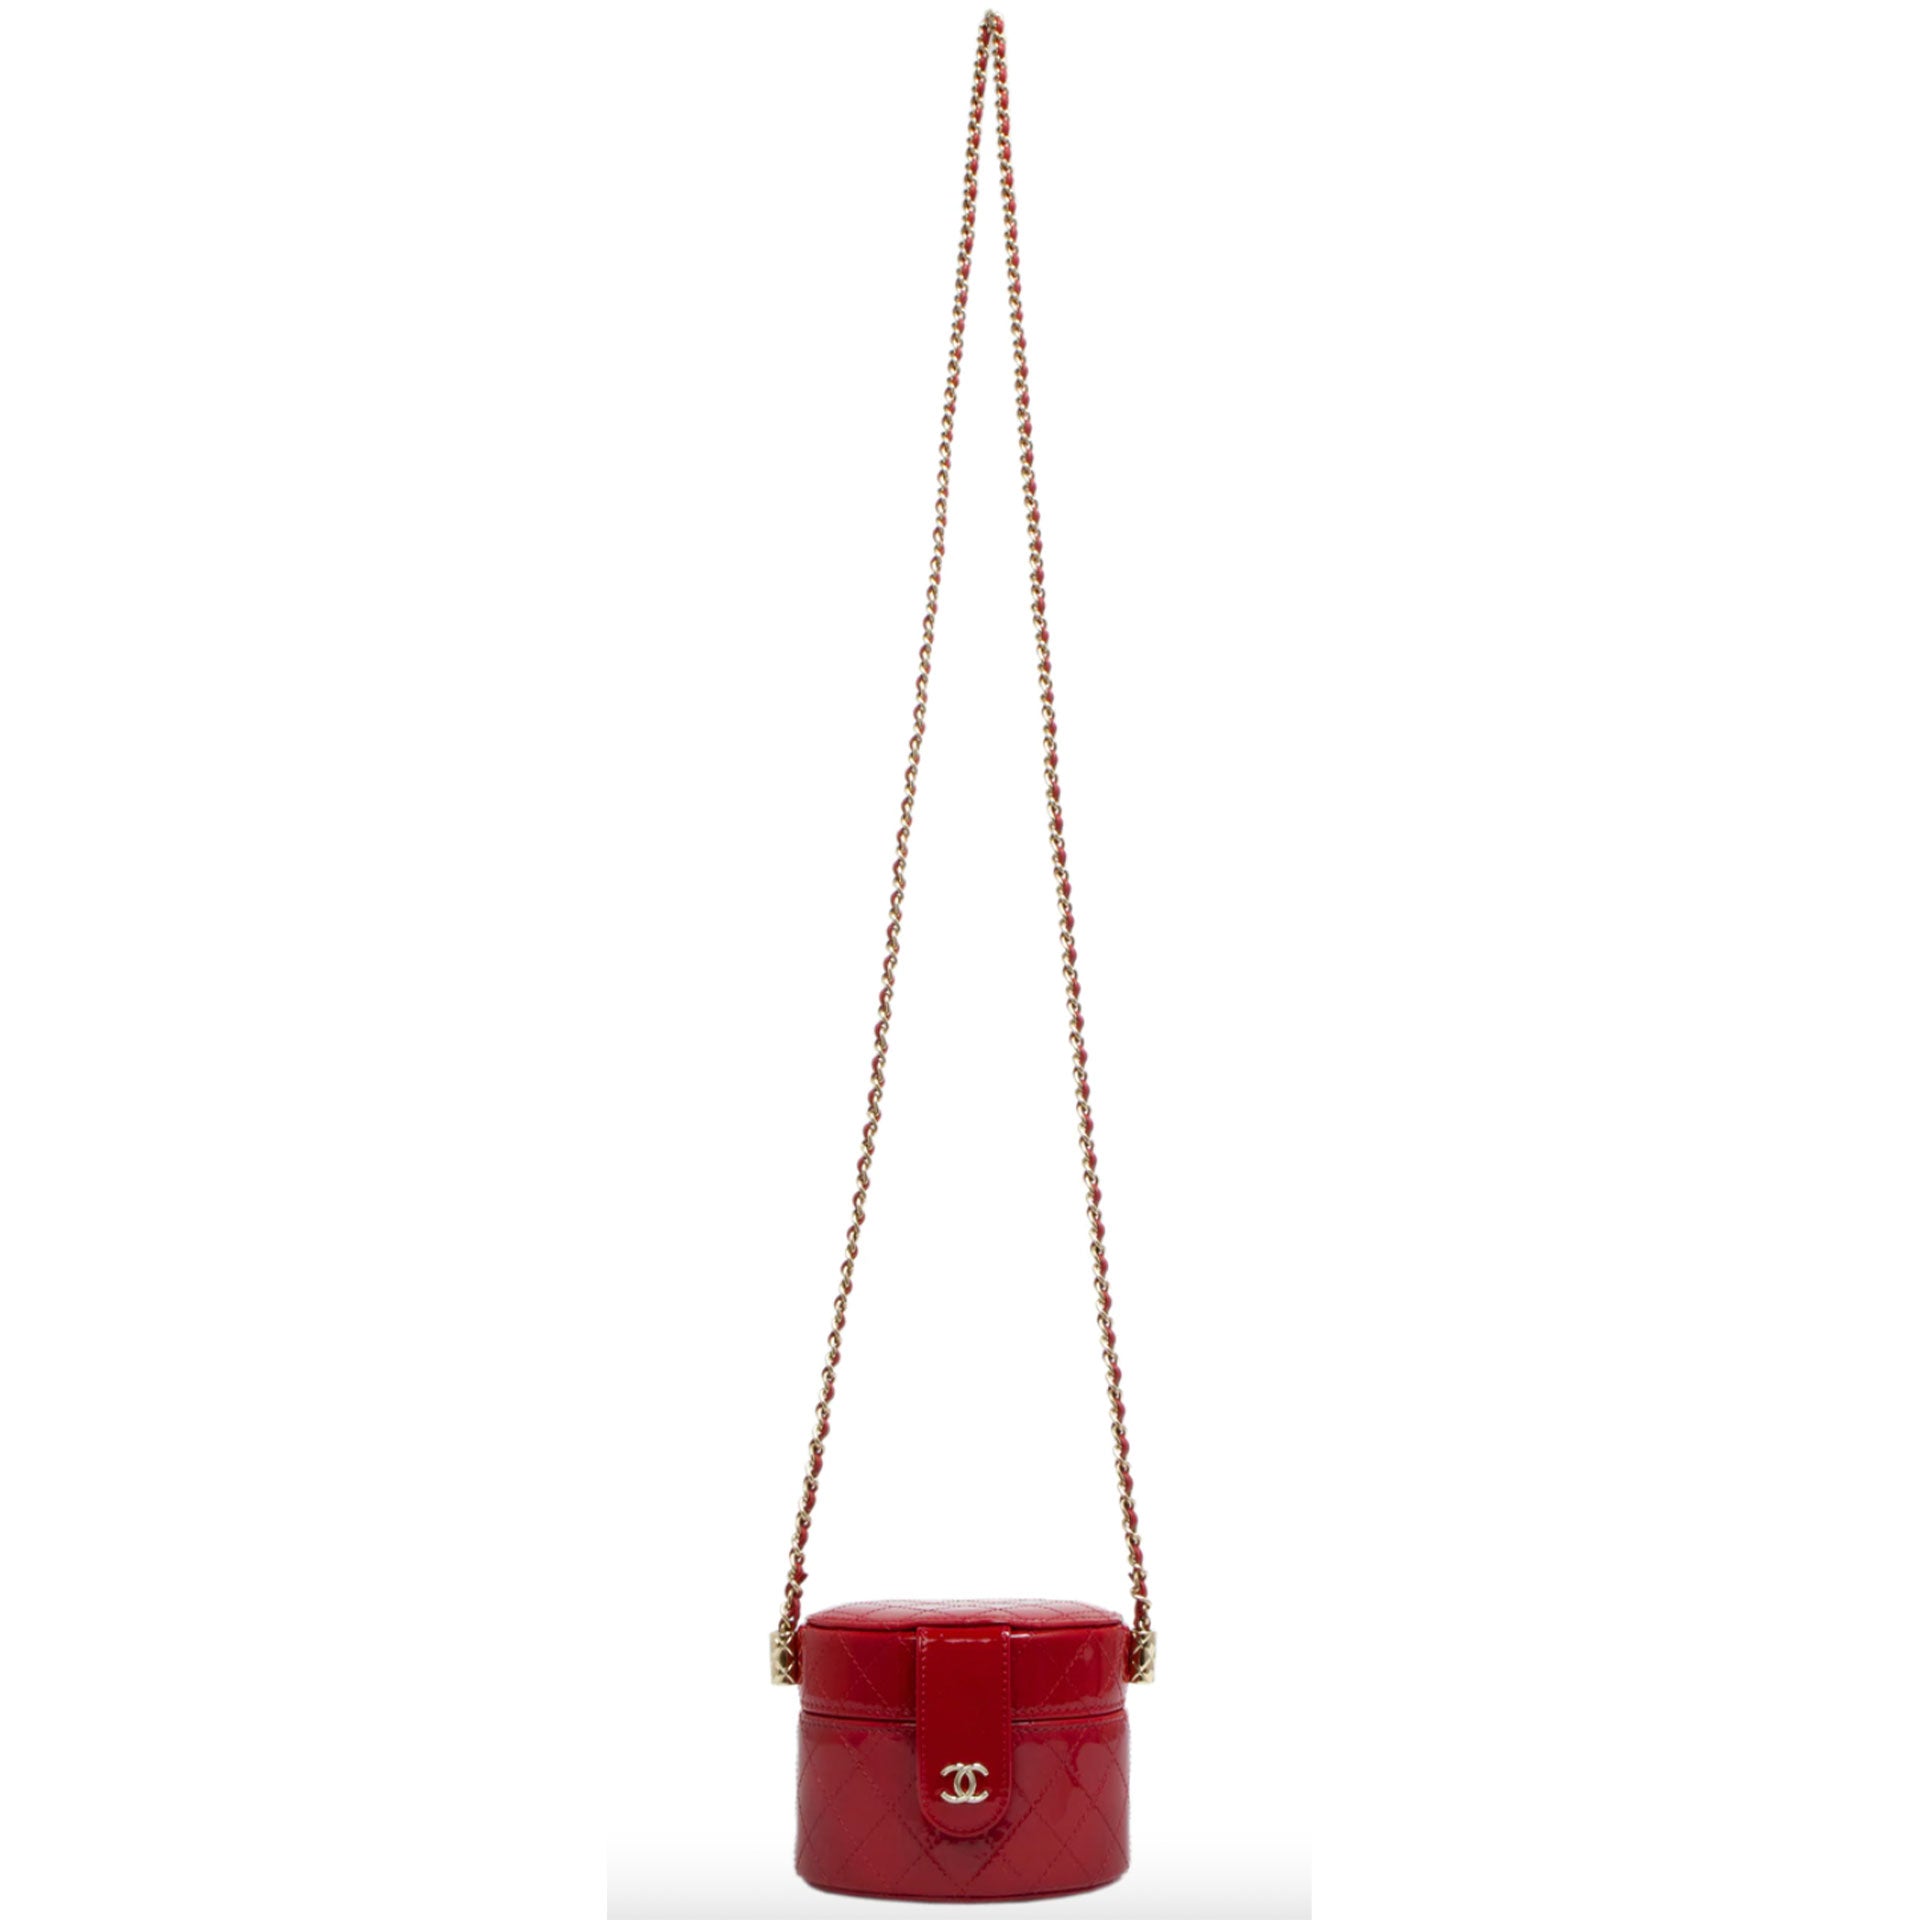 Chanel Micro Mini Jewelry Box Crossbody Bag